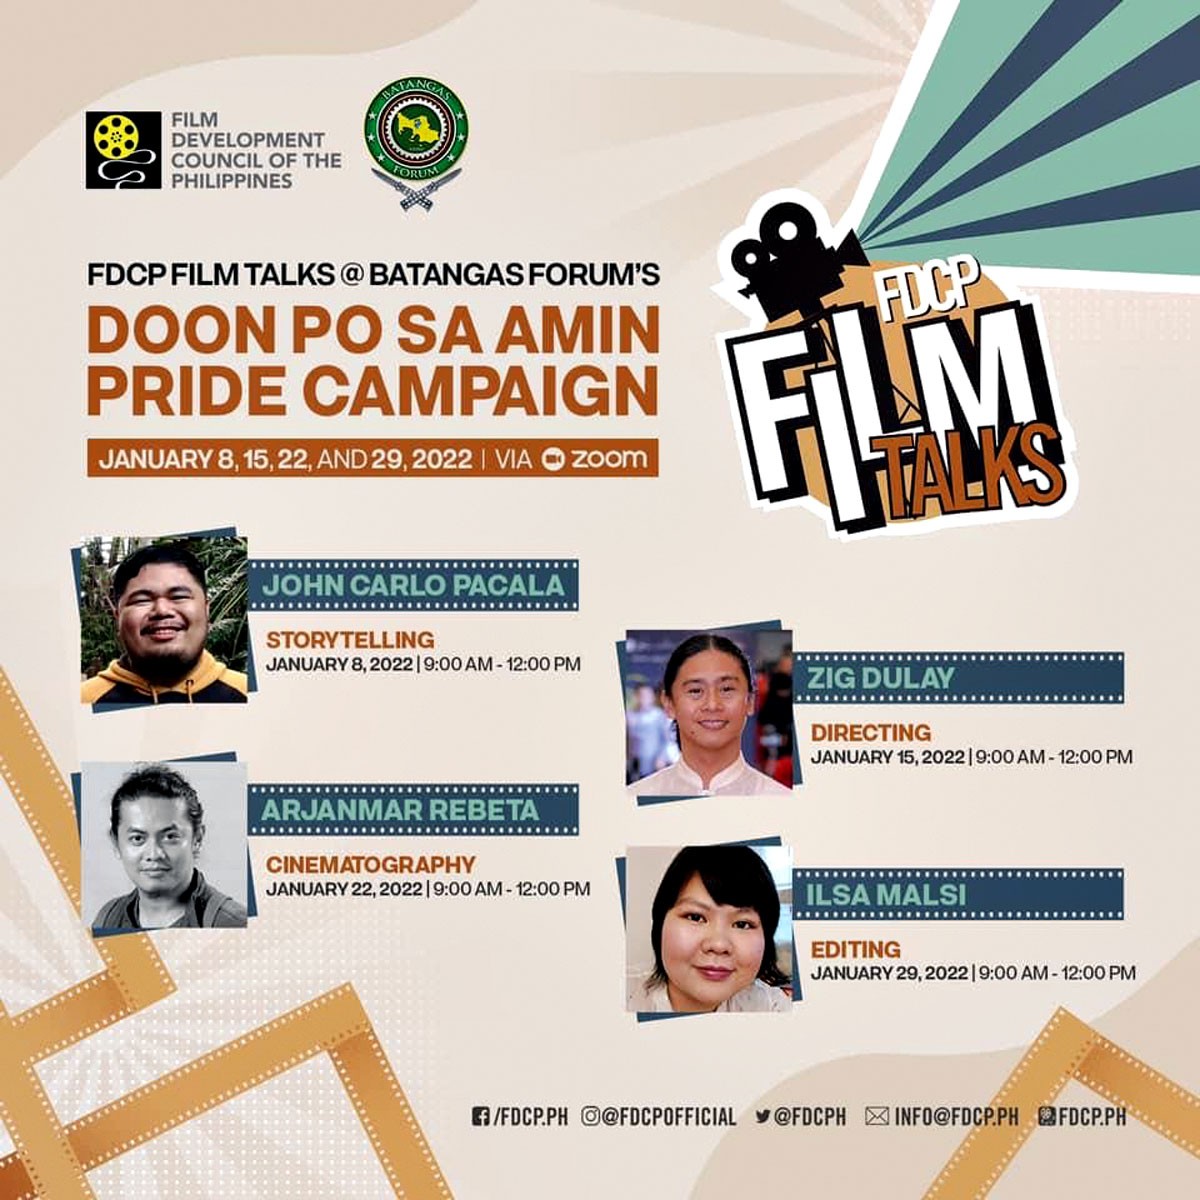 FDCP Film Talks Batangas Forum Doon Po Sa Amin Pride Campaign